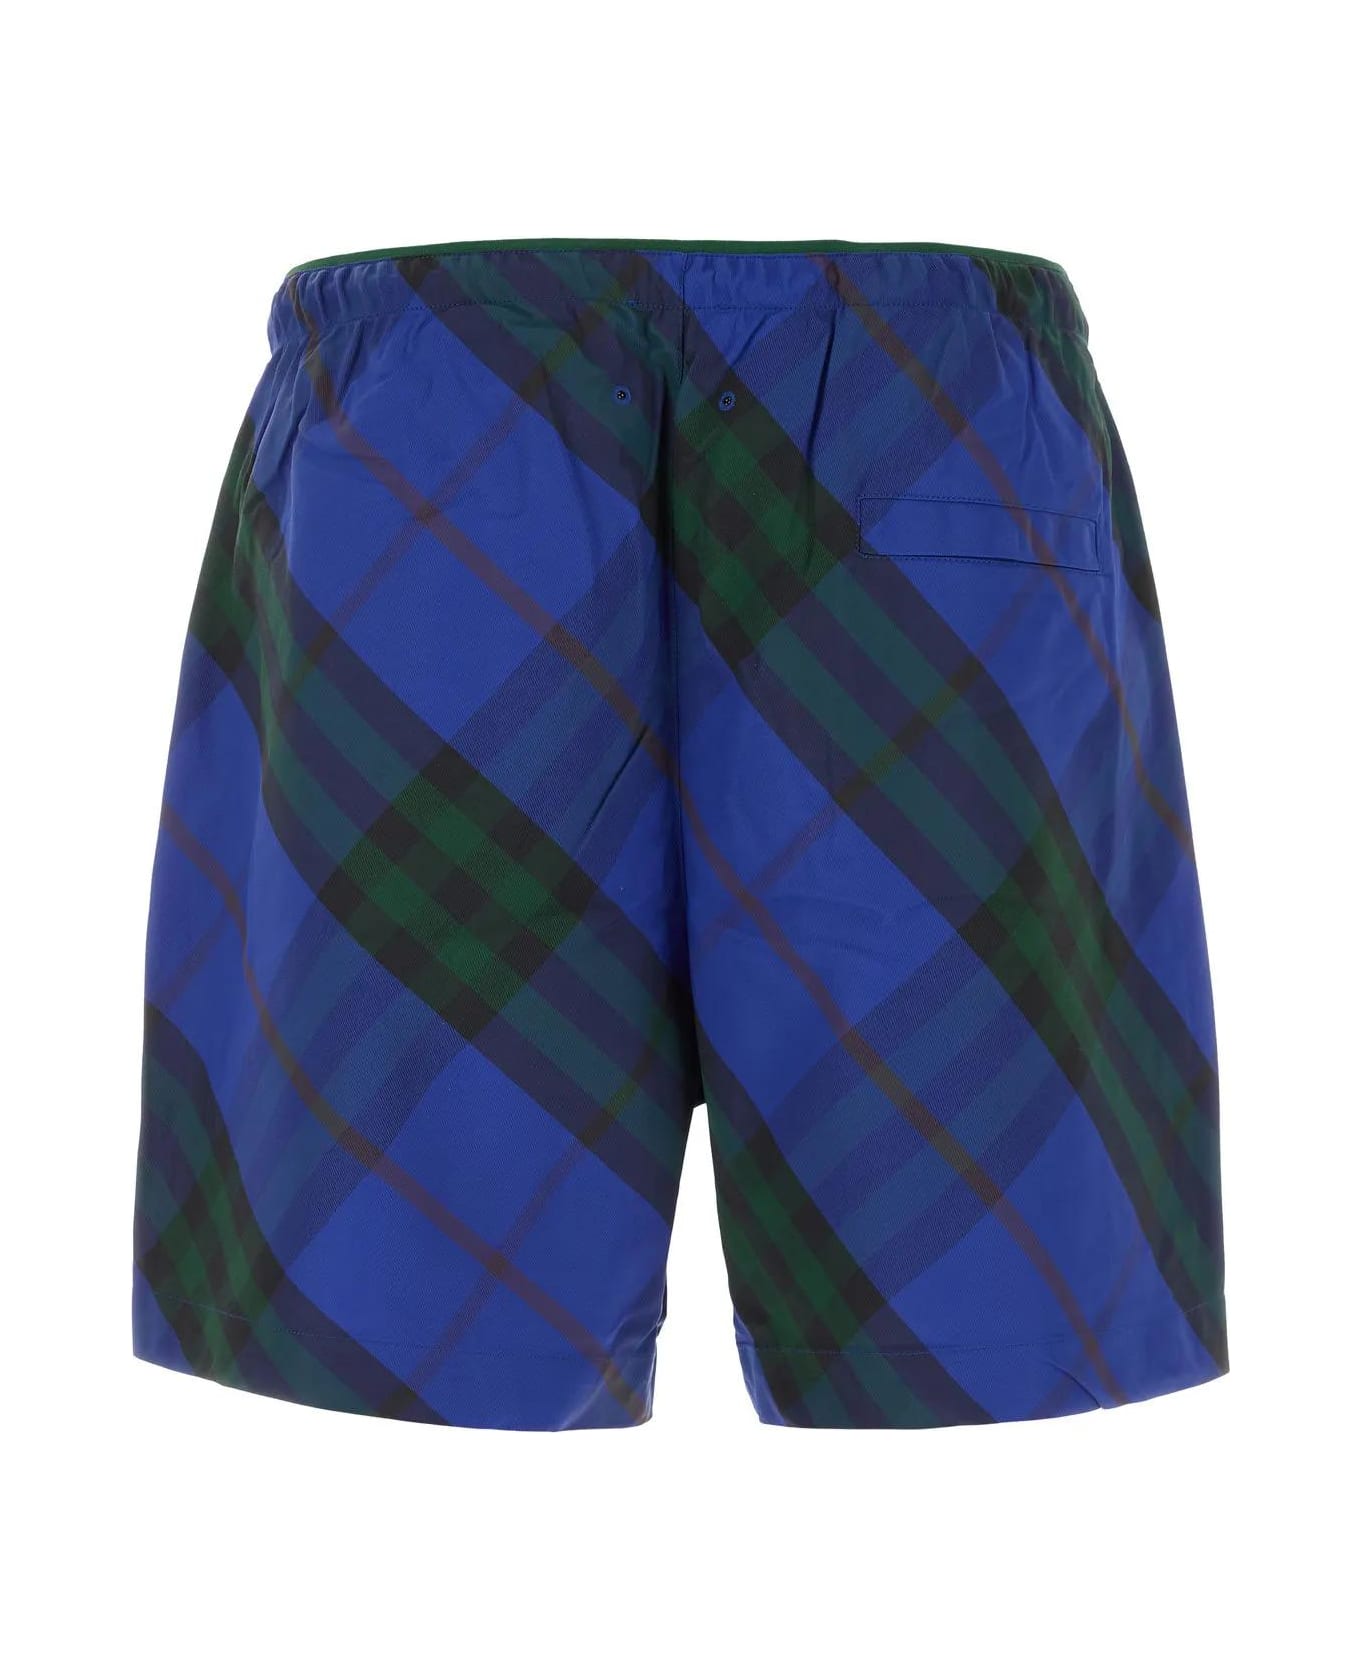 Burberry Printed Nylon Swimming Shorts - BLACK/BLUE ショートパンツ